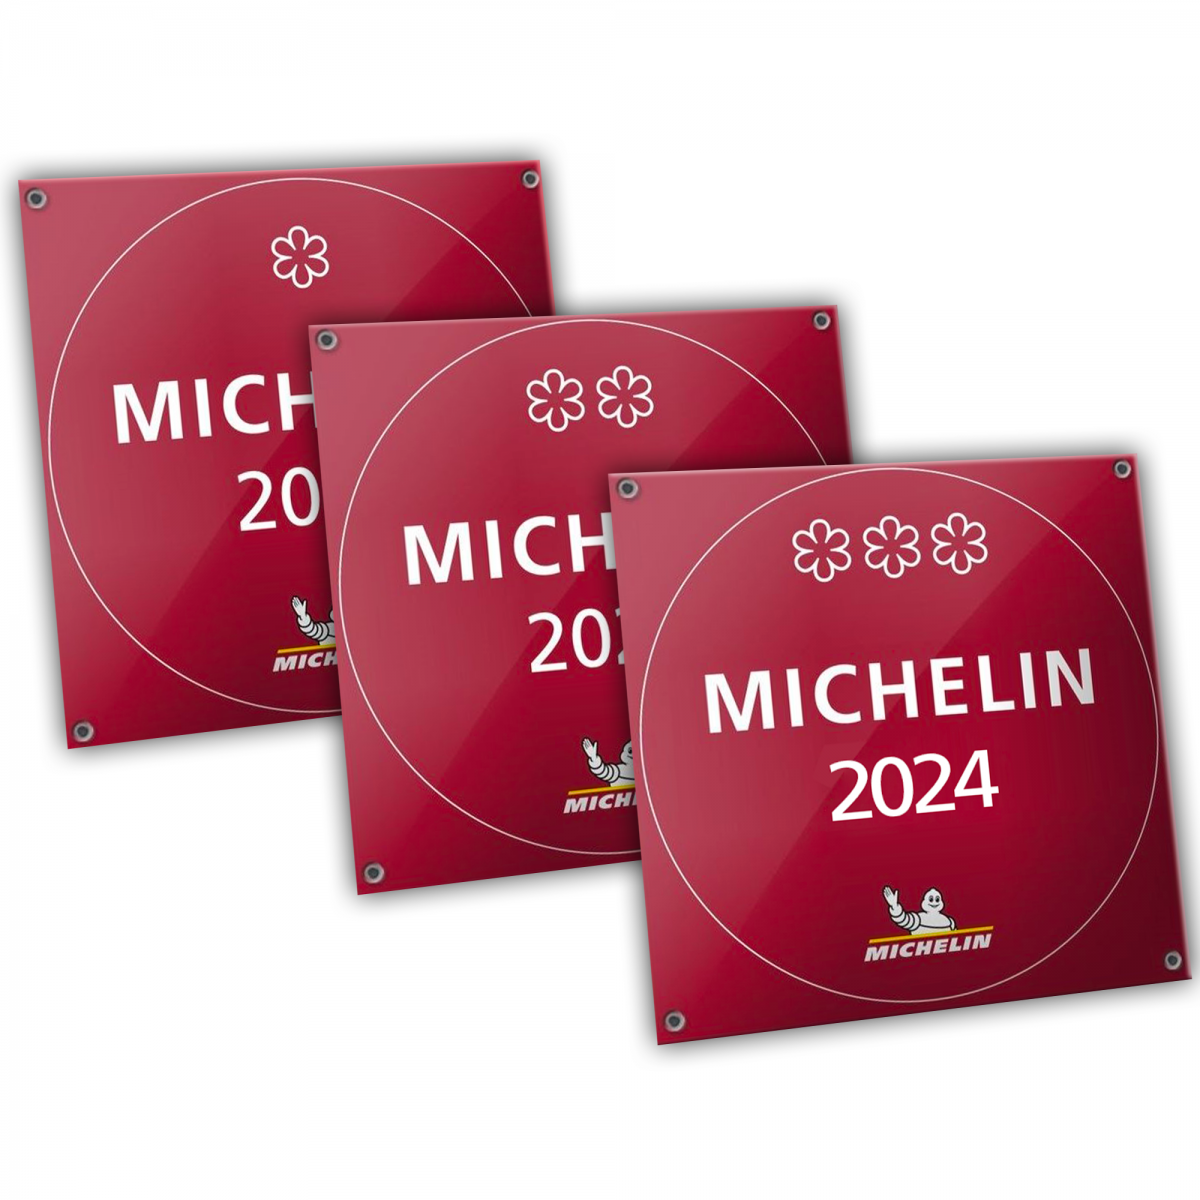 Guia Michelin retorna ao Brasil em 2024